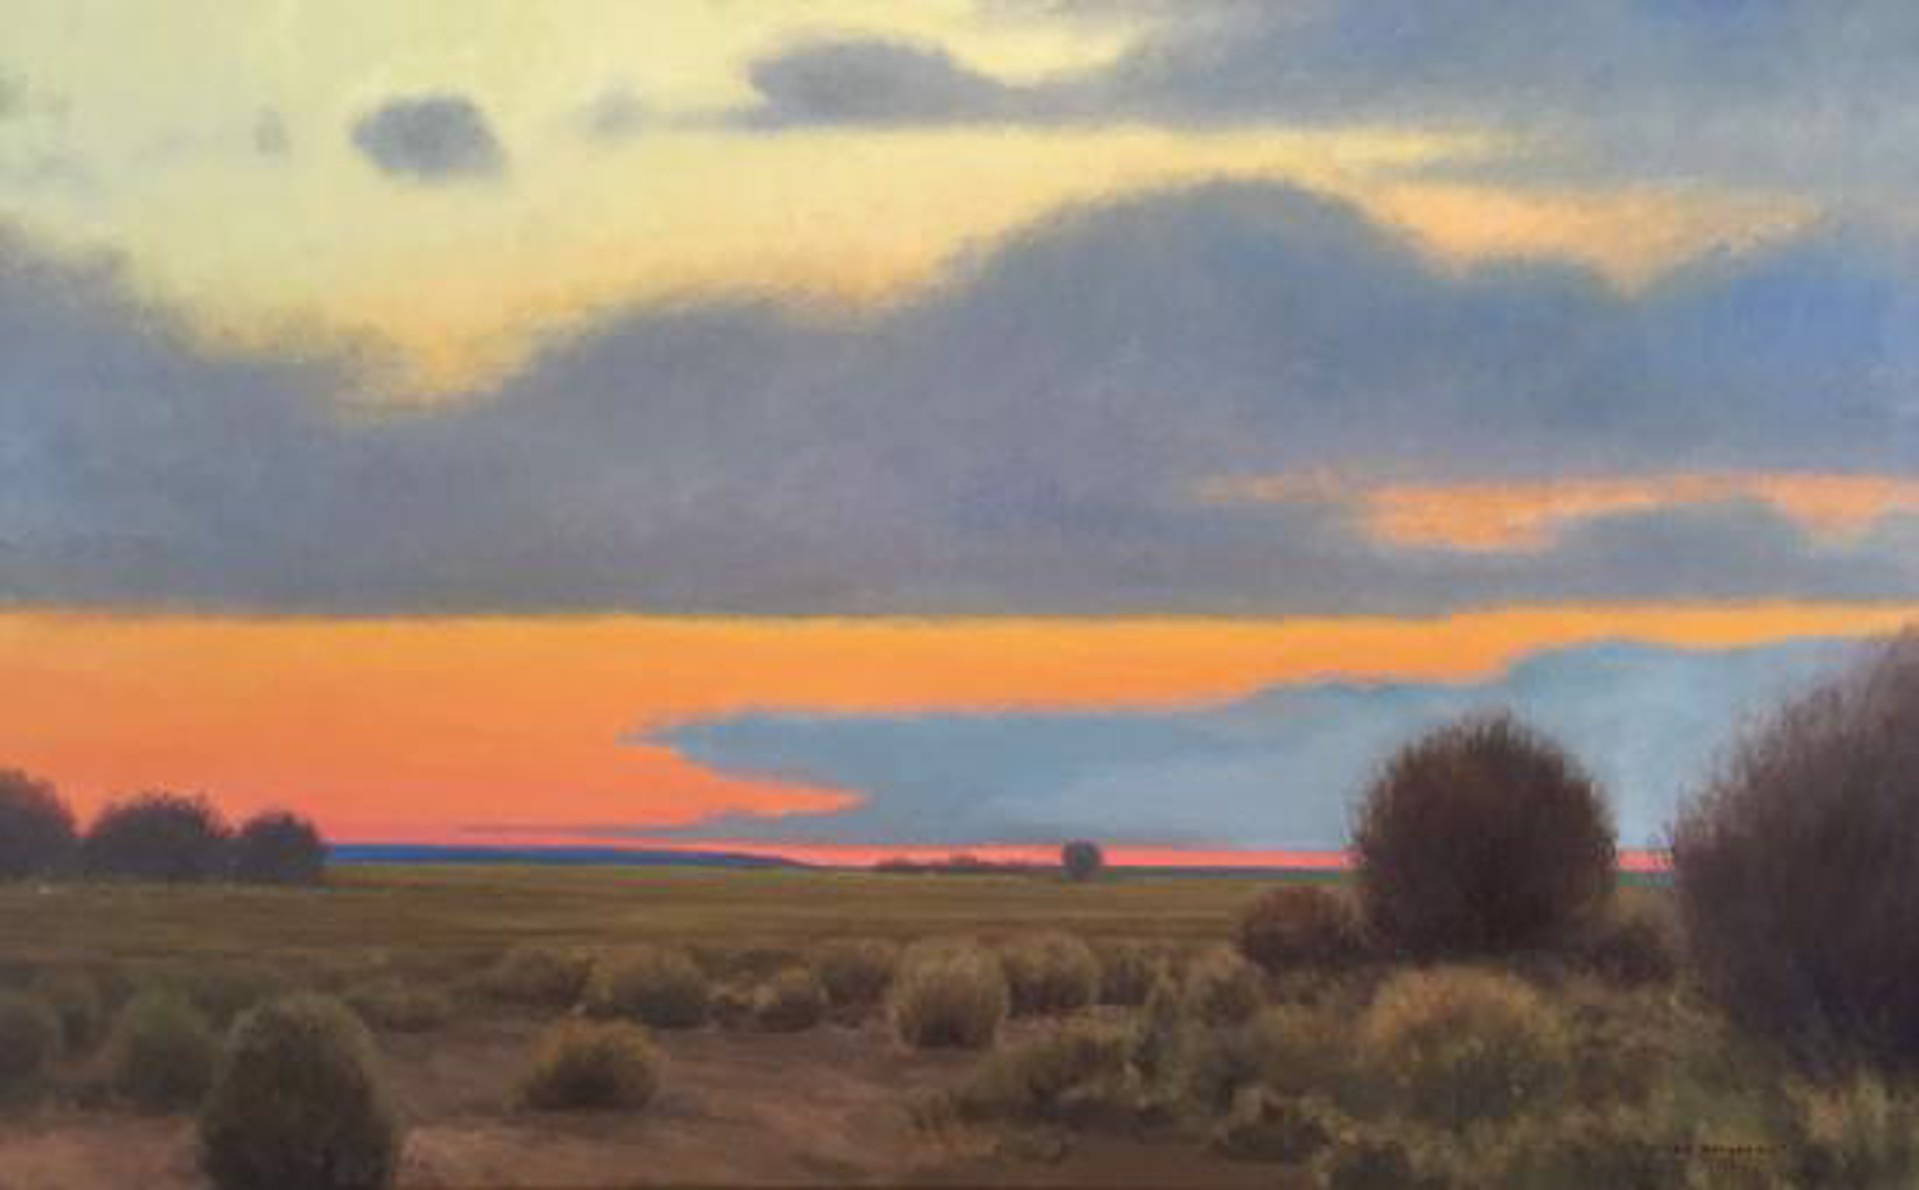 Prairie Dusk by Mike Keepness (1981 - 2021)